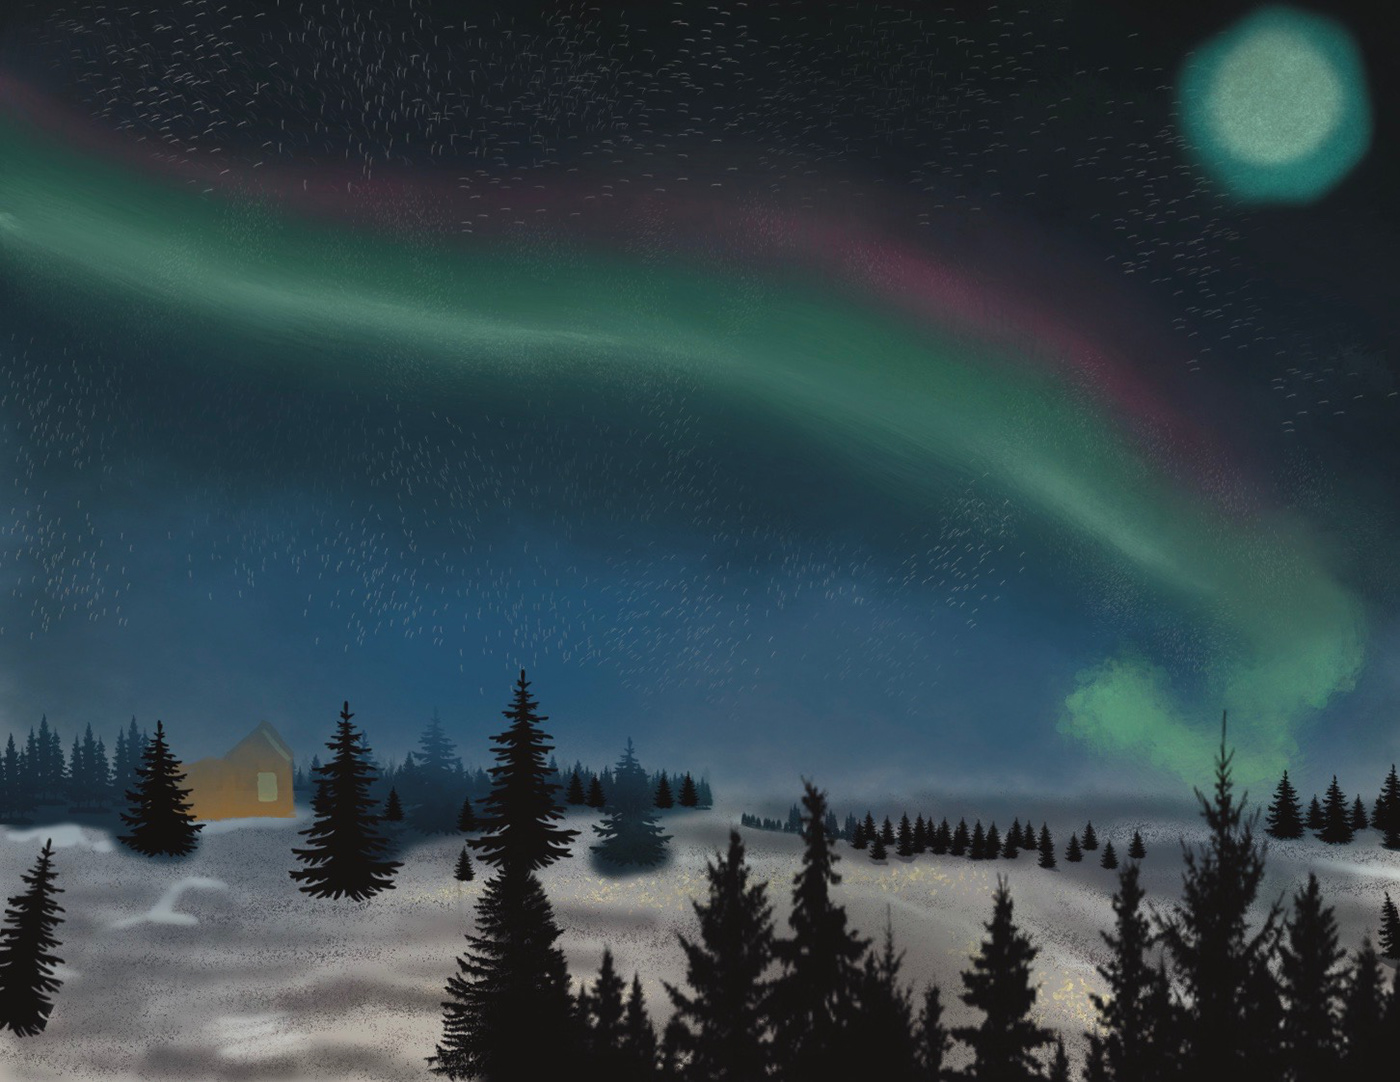 Alask auroras digitalart ILLUSTRATION  scenery